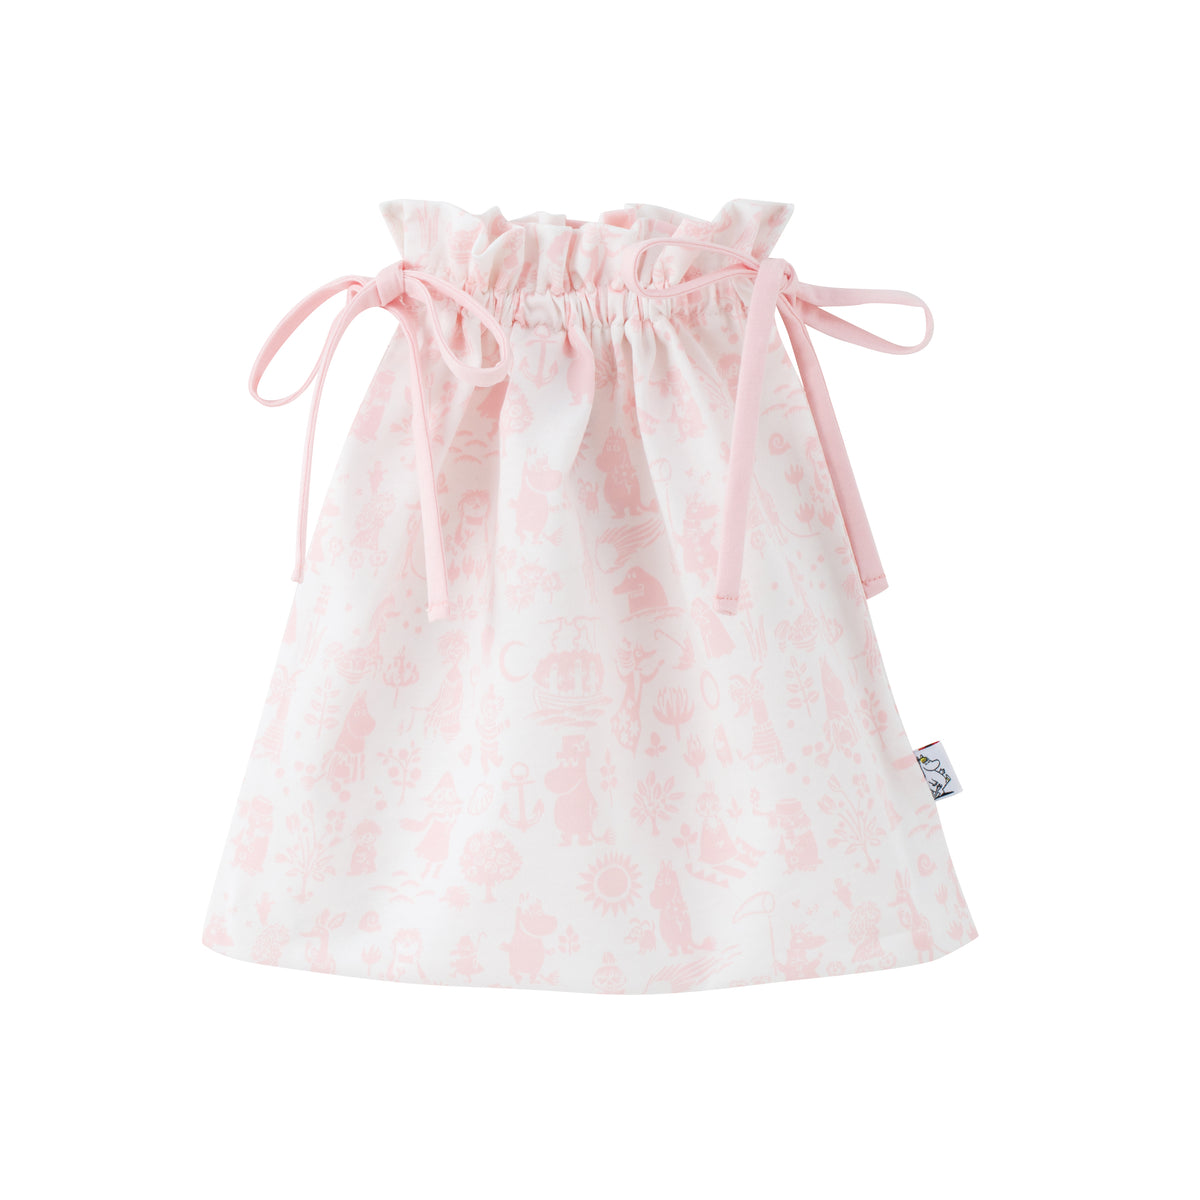 Vauva x Moomin - Baby Girls Moomin Print Gift Bag (Pink)